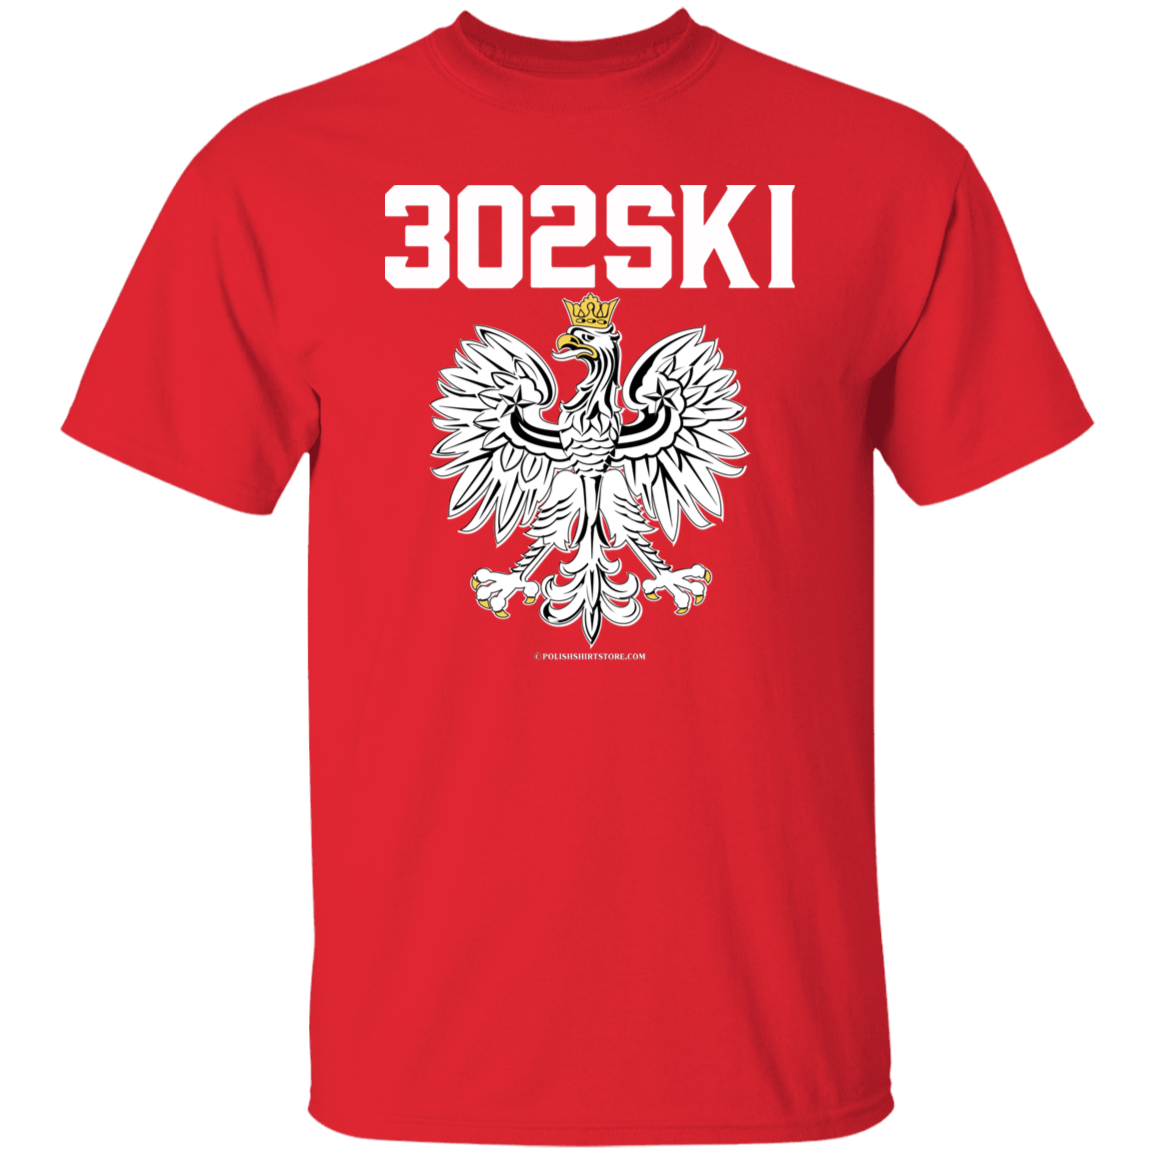 302SKI Apparel CustomCat G500 5.3 oz. T-Shirt Red S